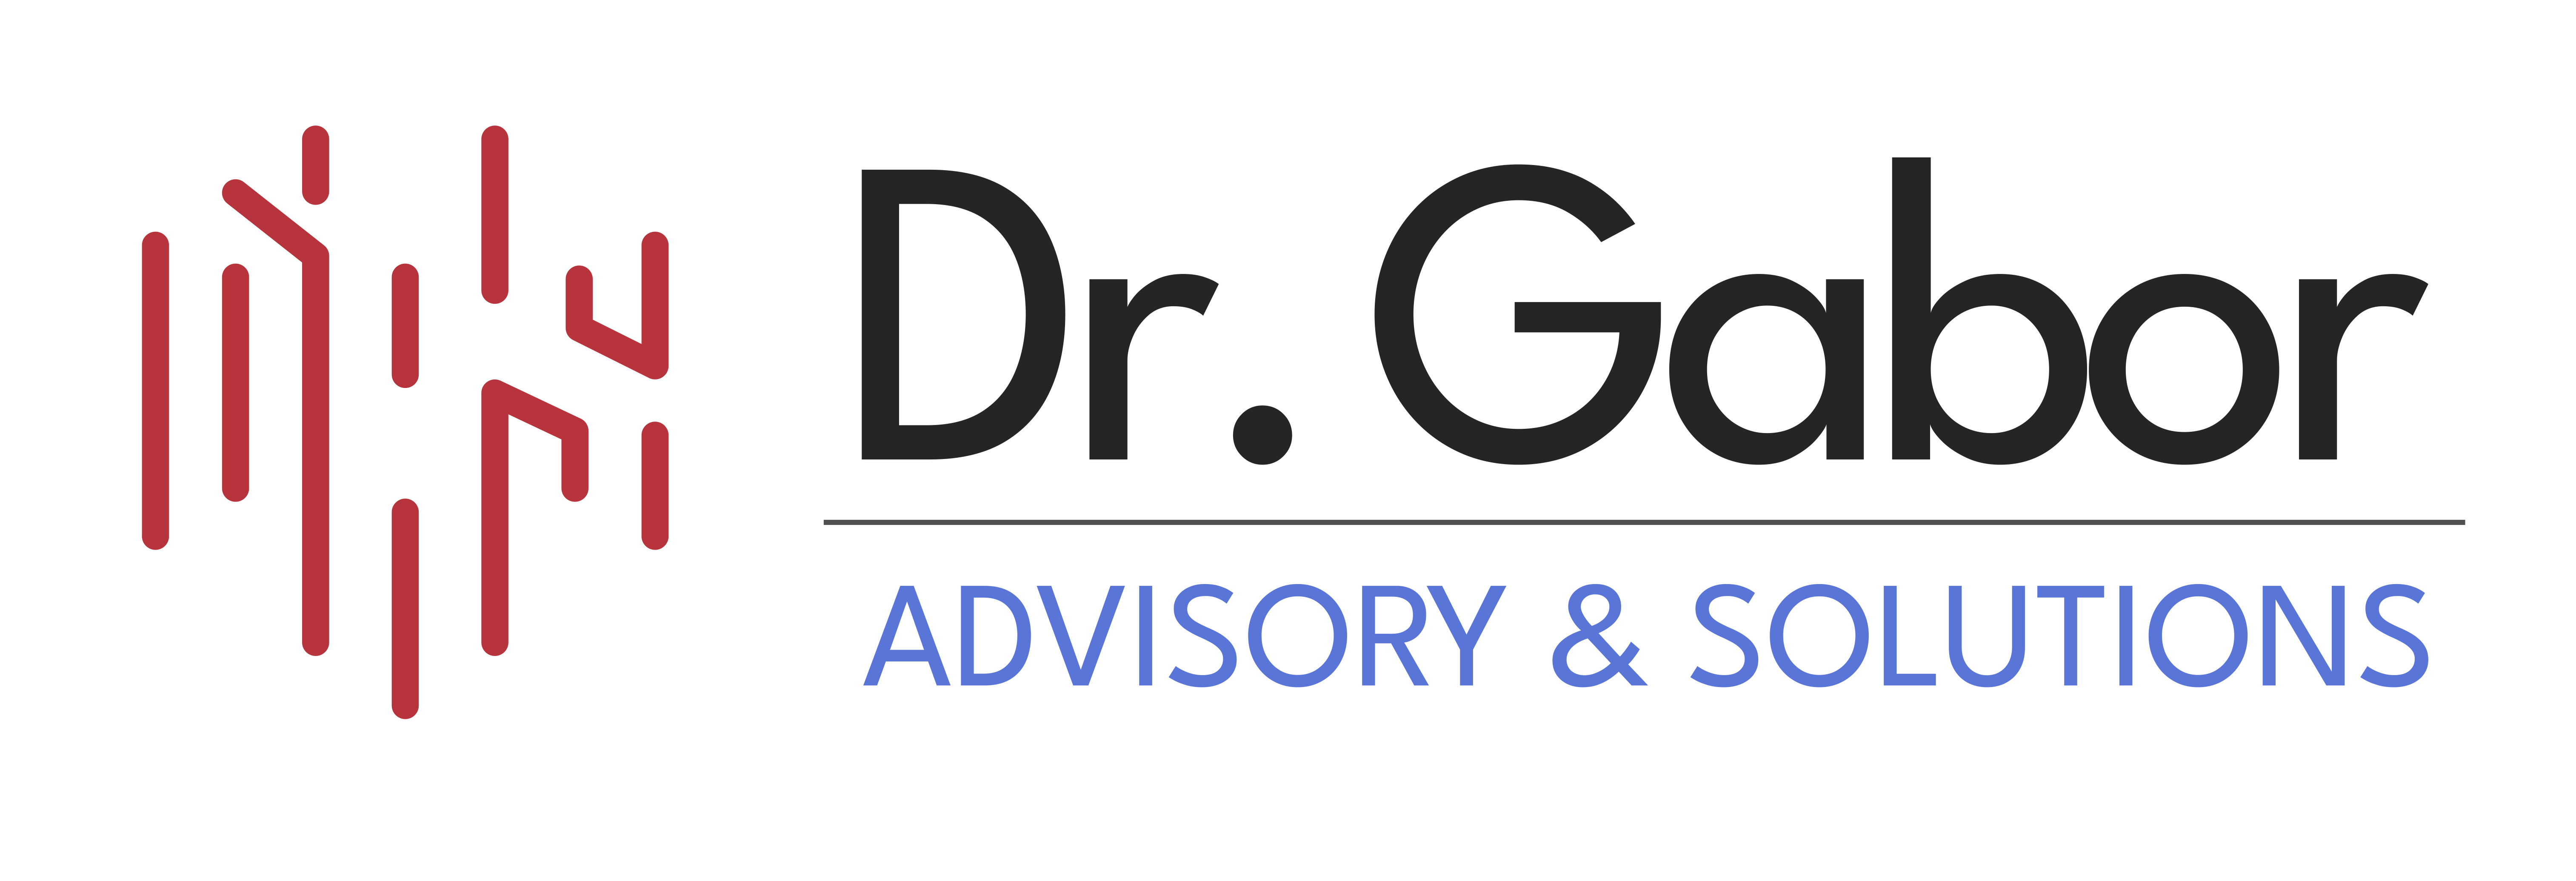 Dr. Gabor Advisory & Solutions